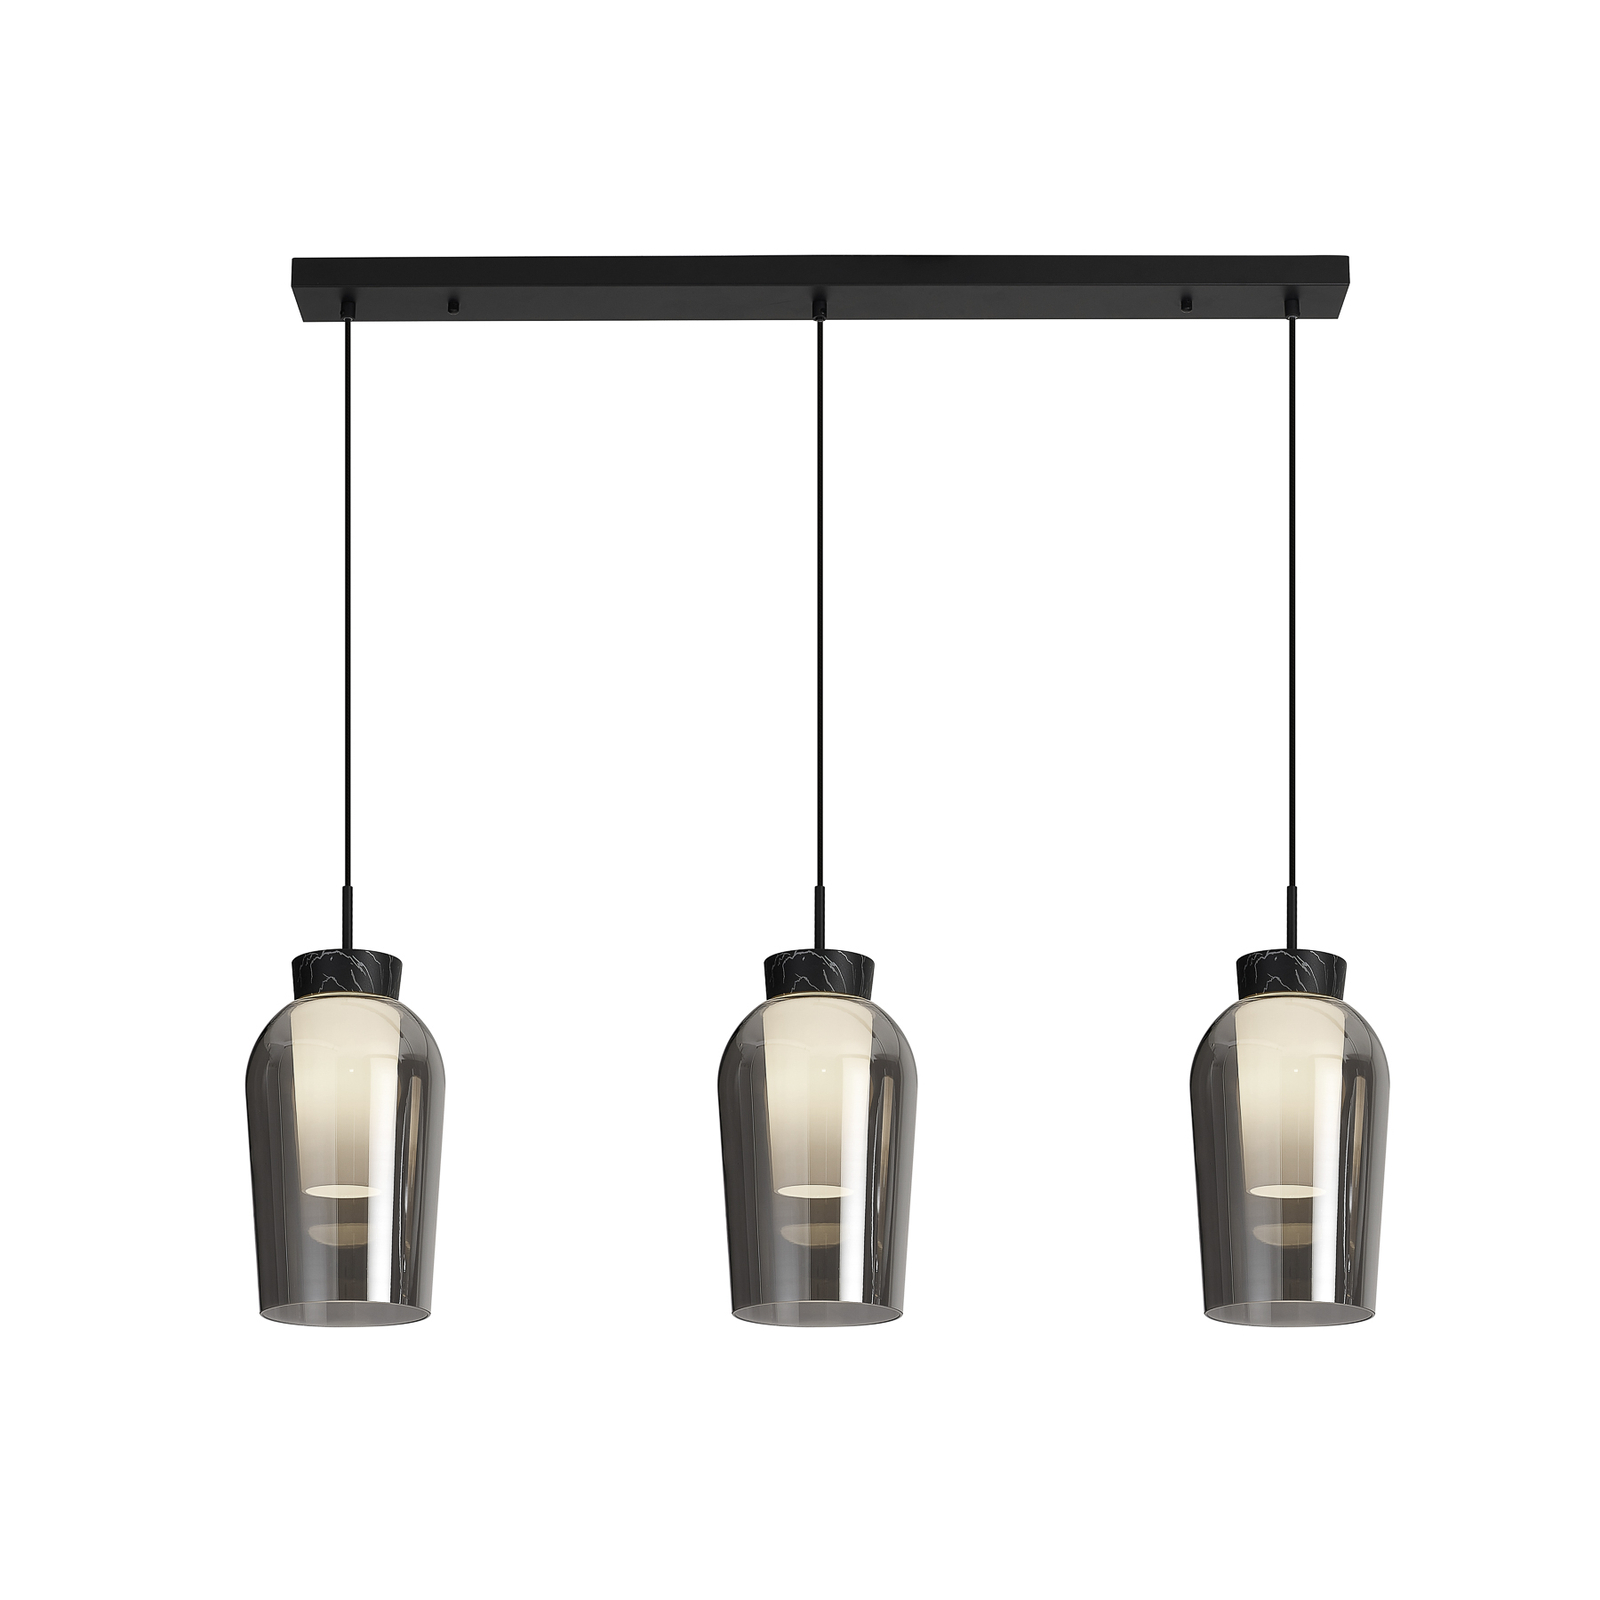 Nora hanglamp, zwart, chroom, 3-lamps, balk, glas